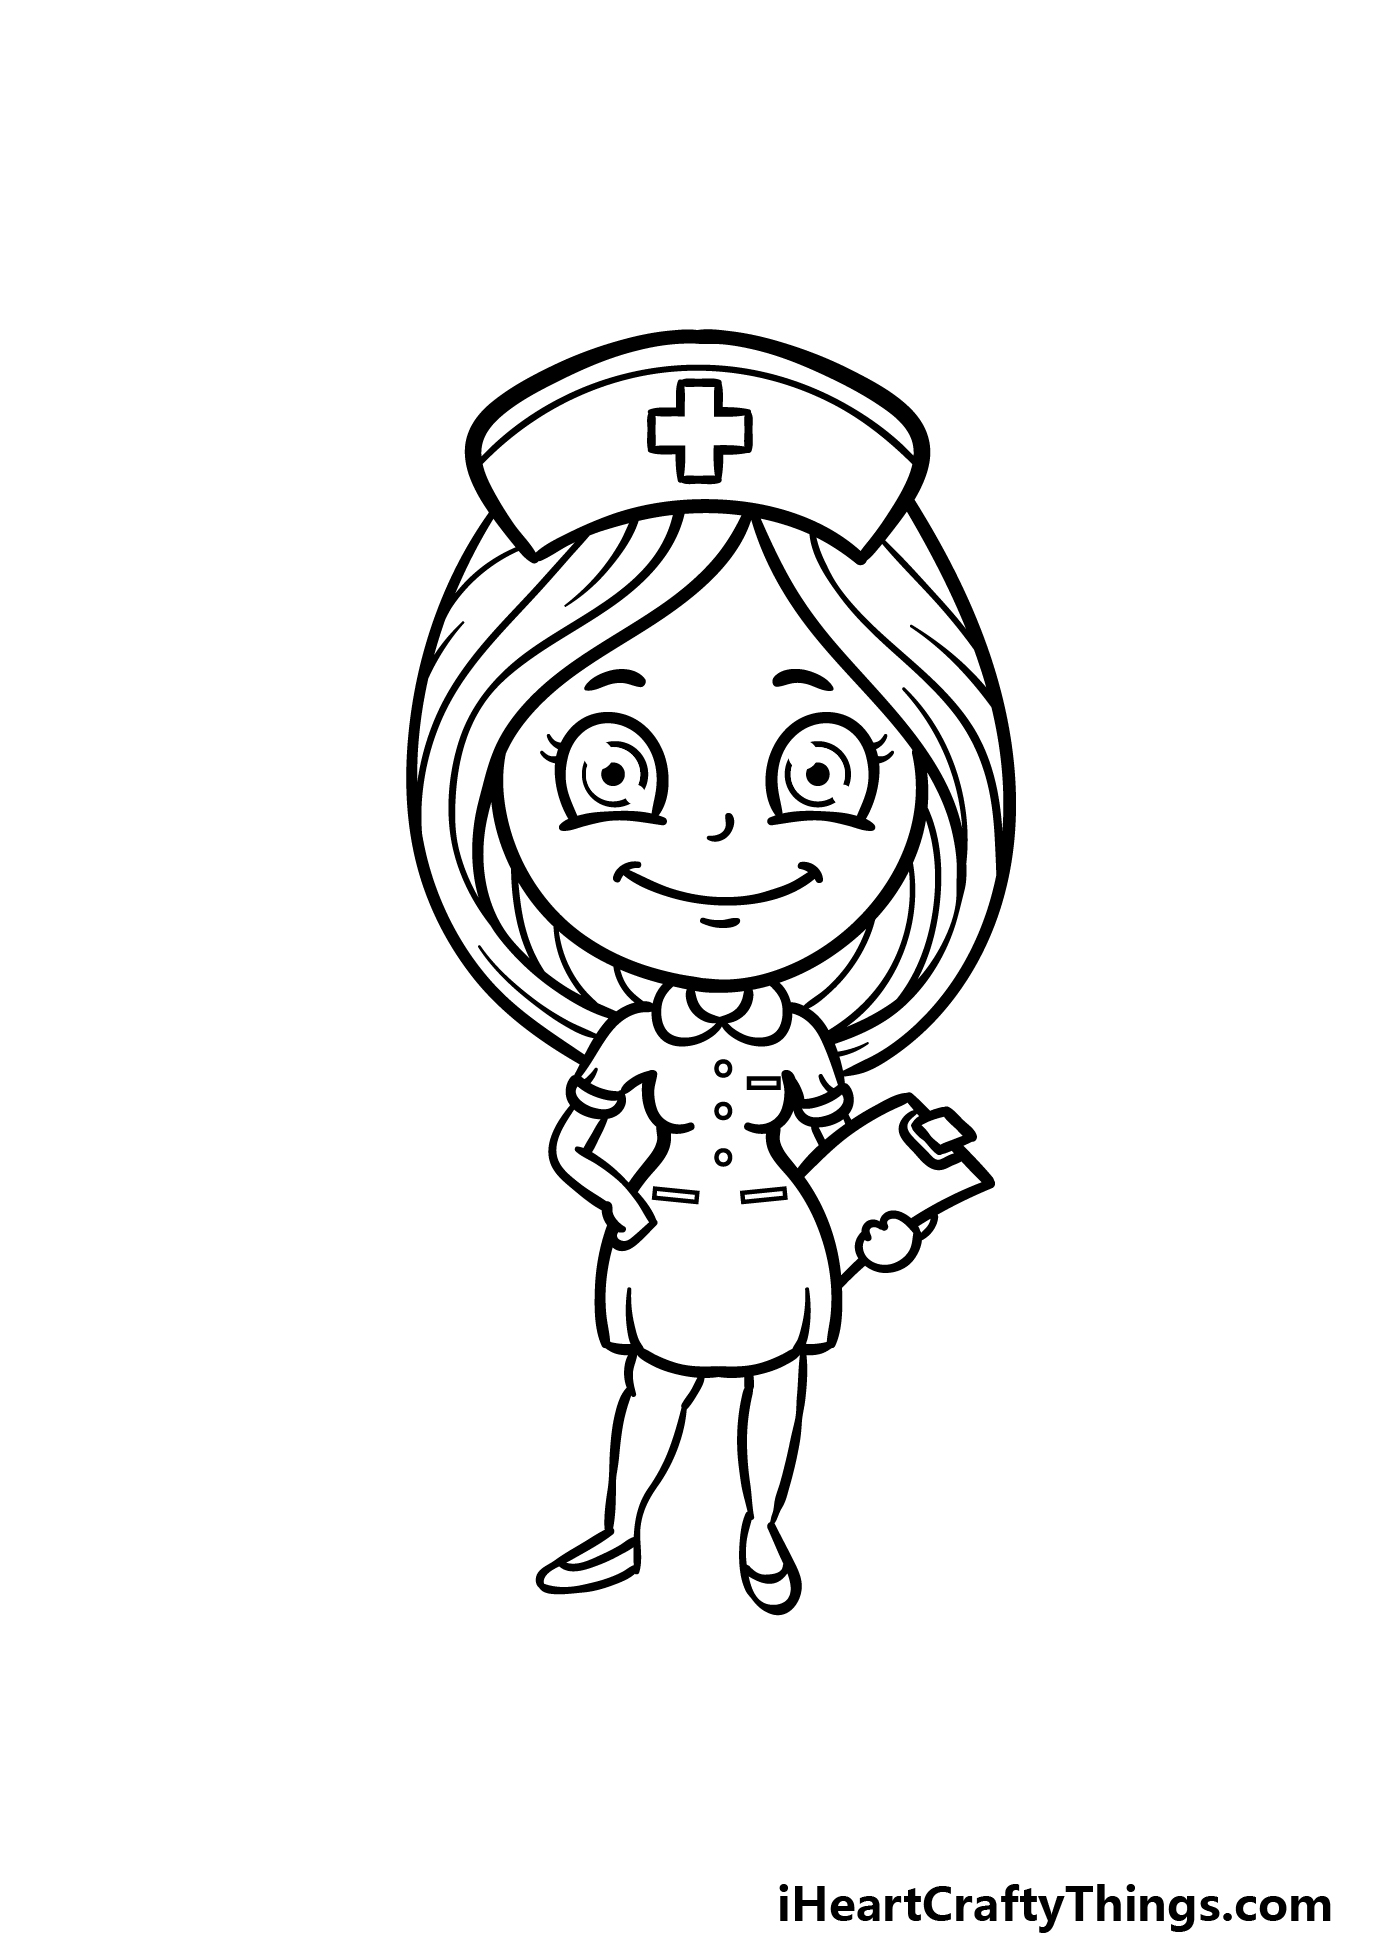 Cartoon Nurse Drawing - How To Draw A Cartoon Nurse Step By Step